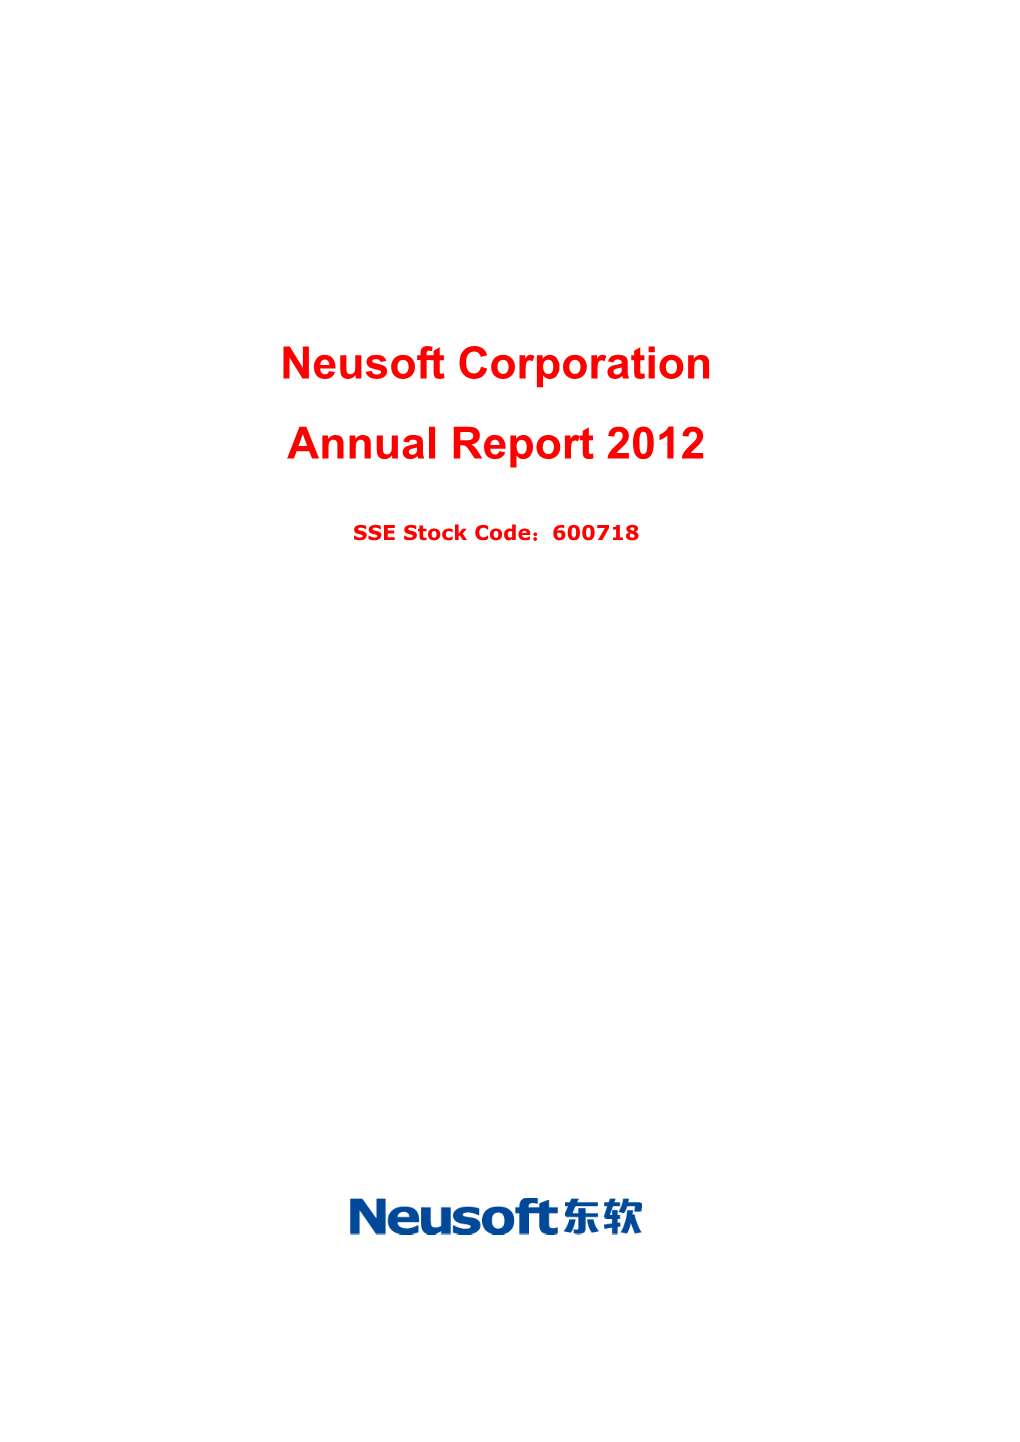 Neusoft Corporation Annual Report 2012